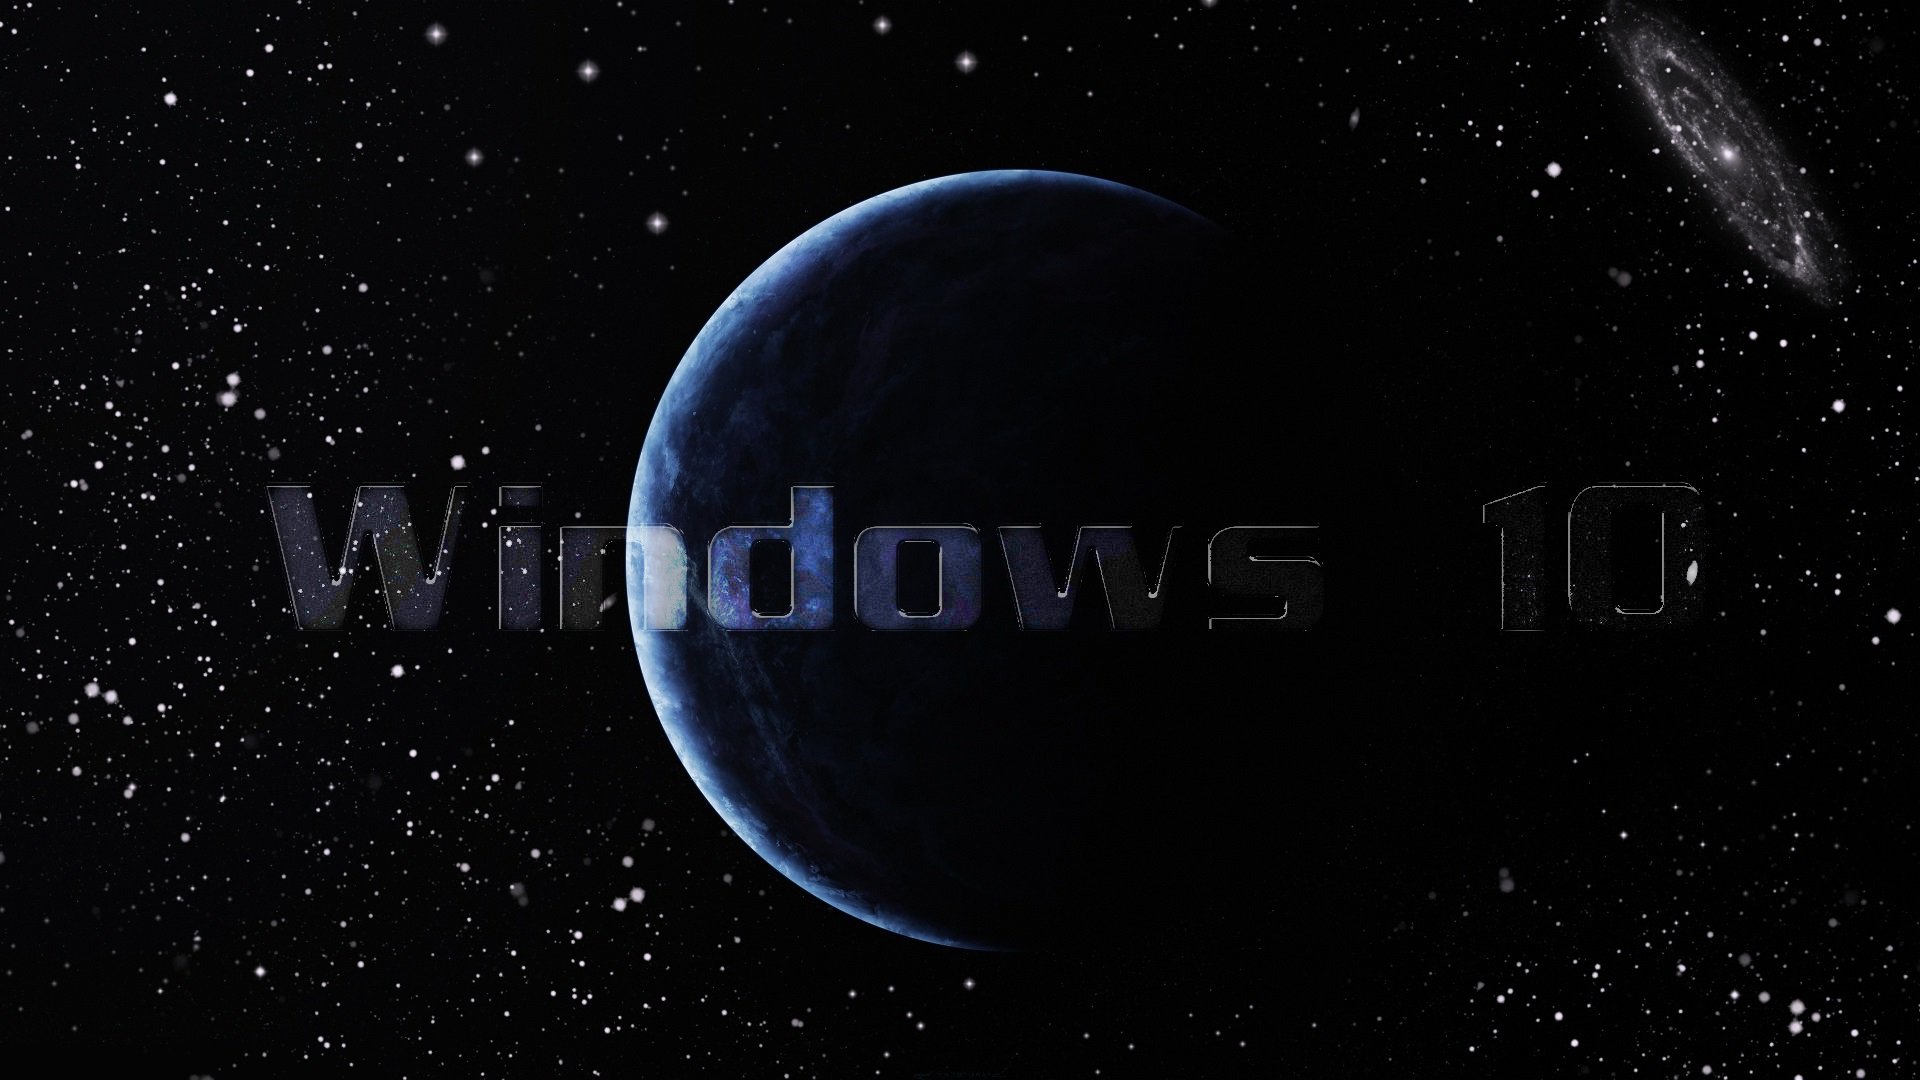 Windows 10 On Galaxy Wallpaper HD 9512 Wallpaper High Resolution